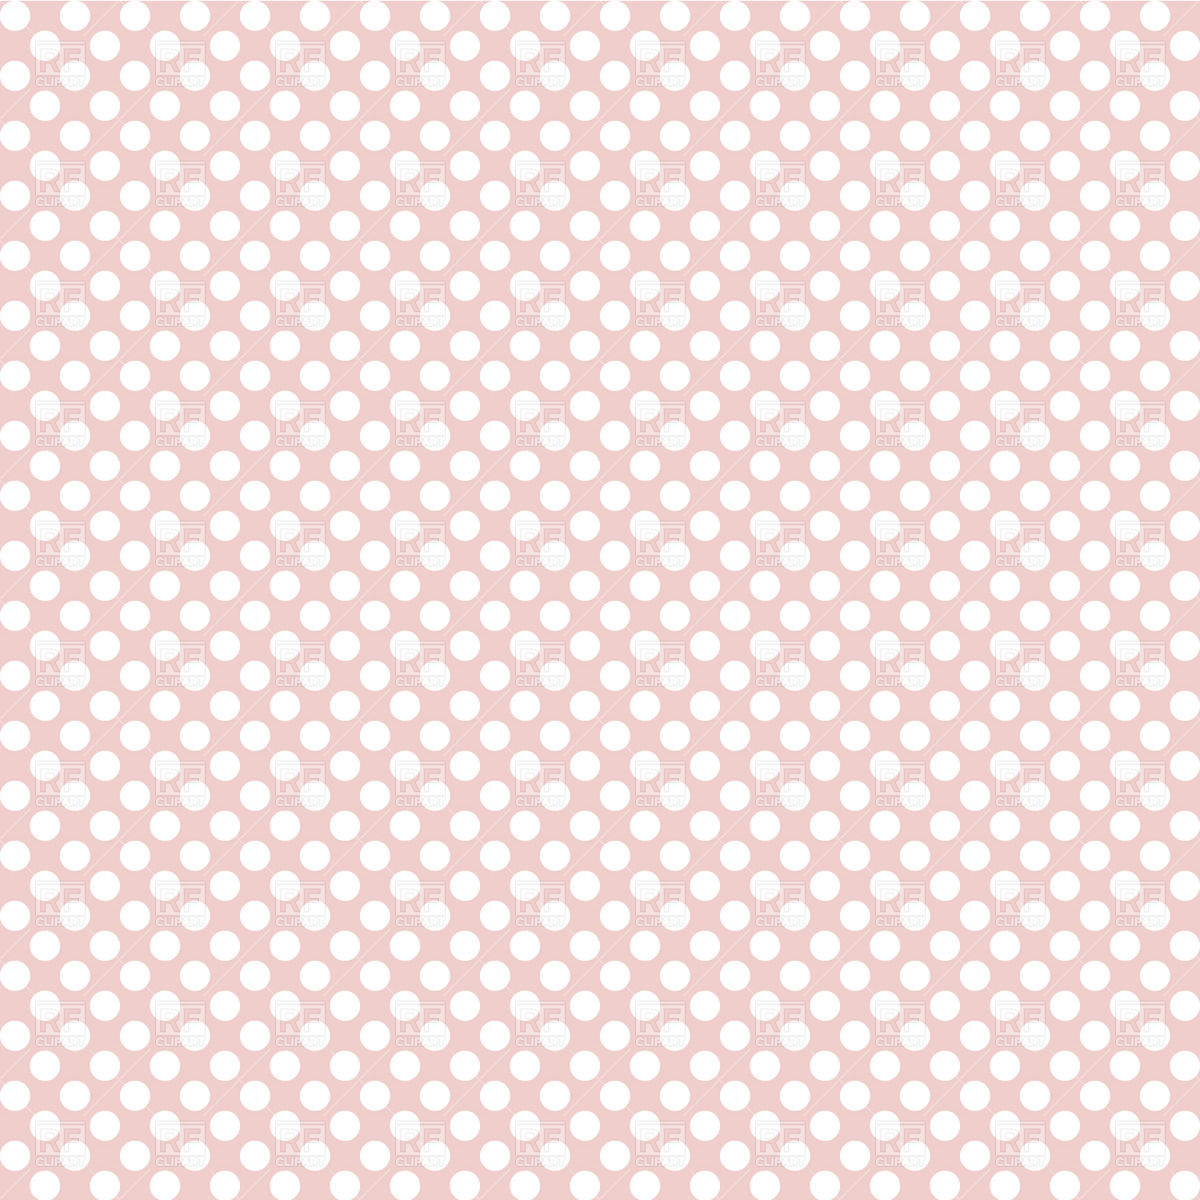 Seamless Polka Dot Pink Wallpaper Vector Image Vector - Textile - HD Wallpaper 